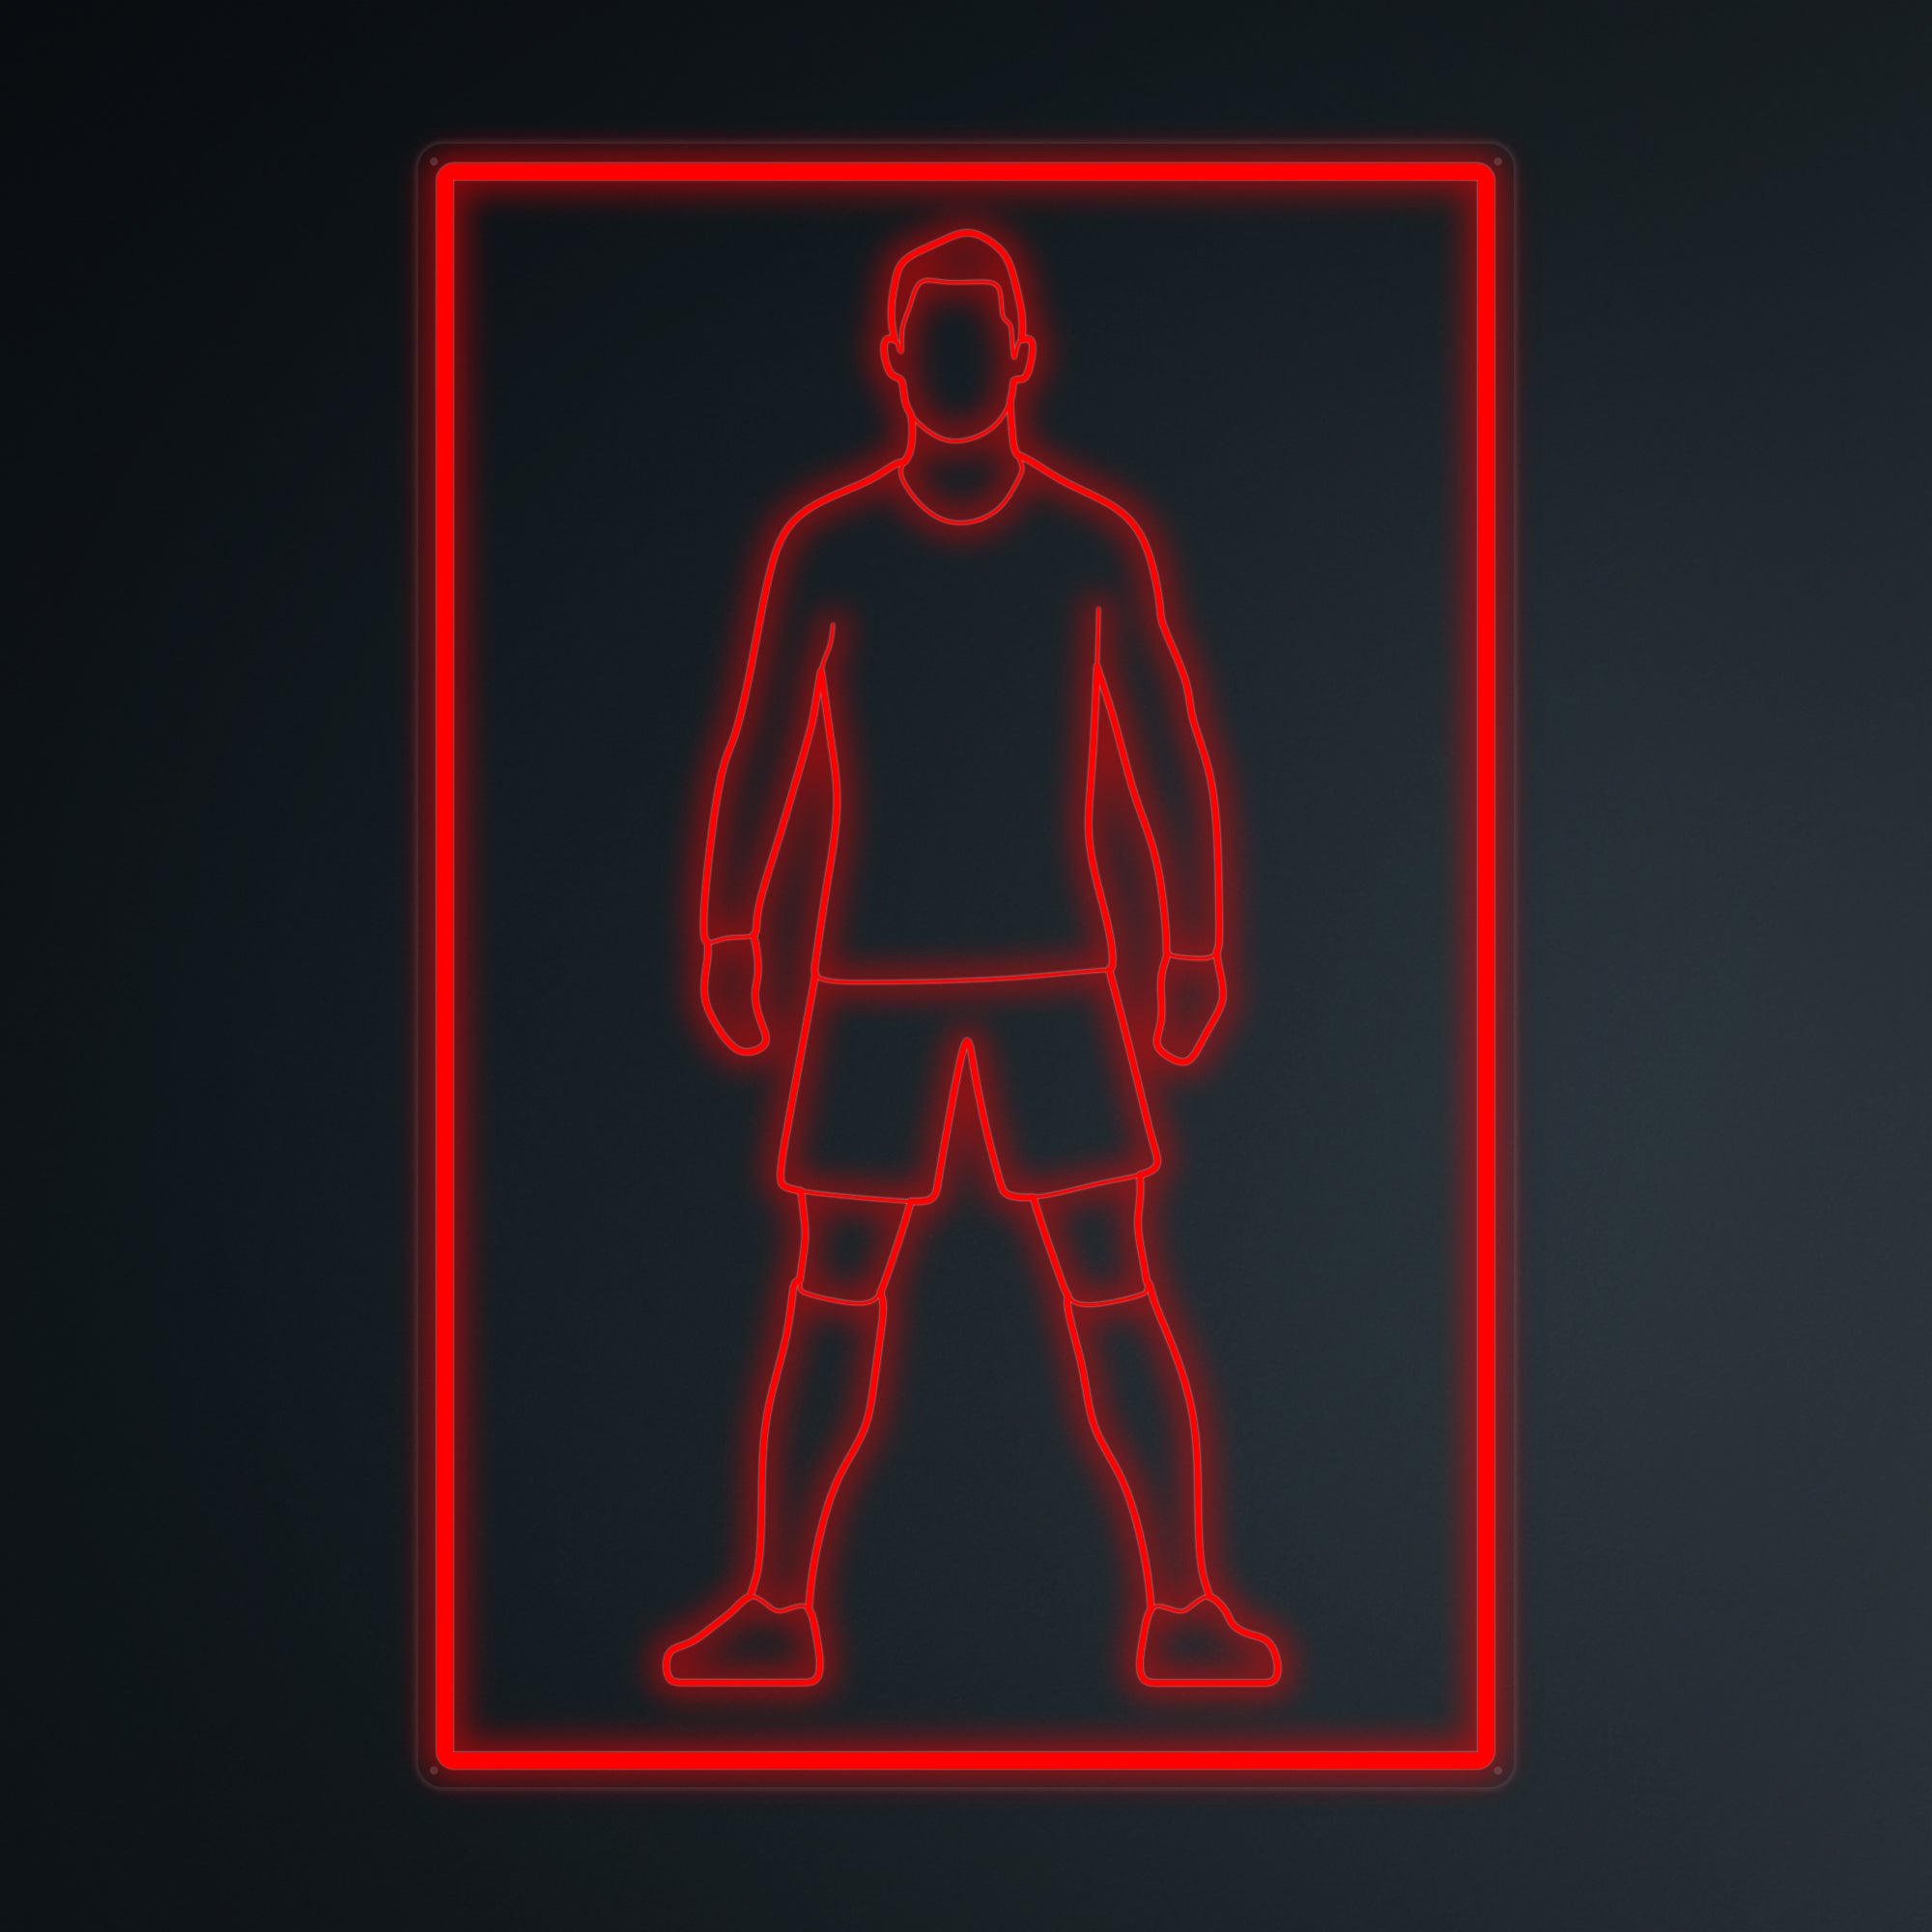 "Sports Football Soccer Spieler 7" Mini-Neonschild